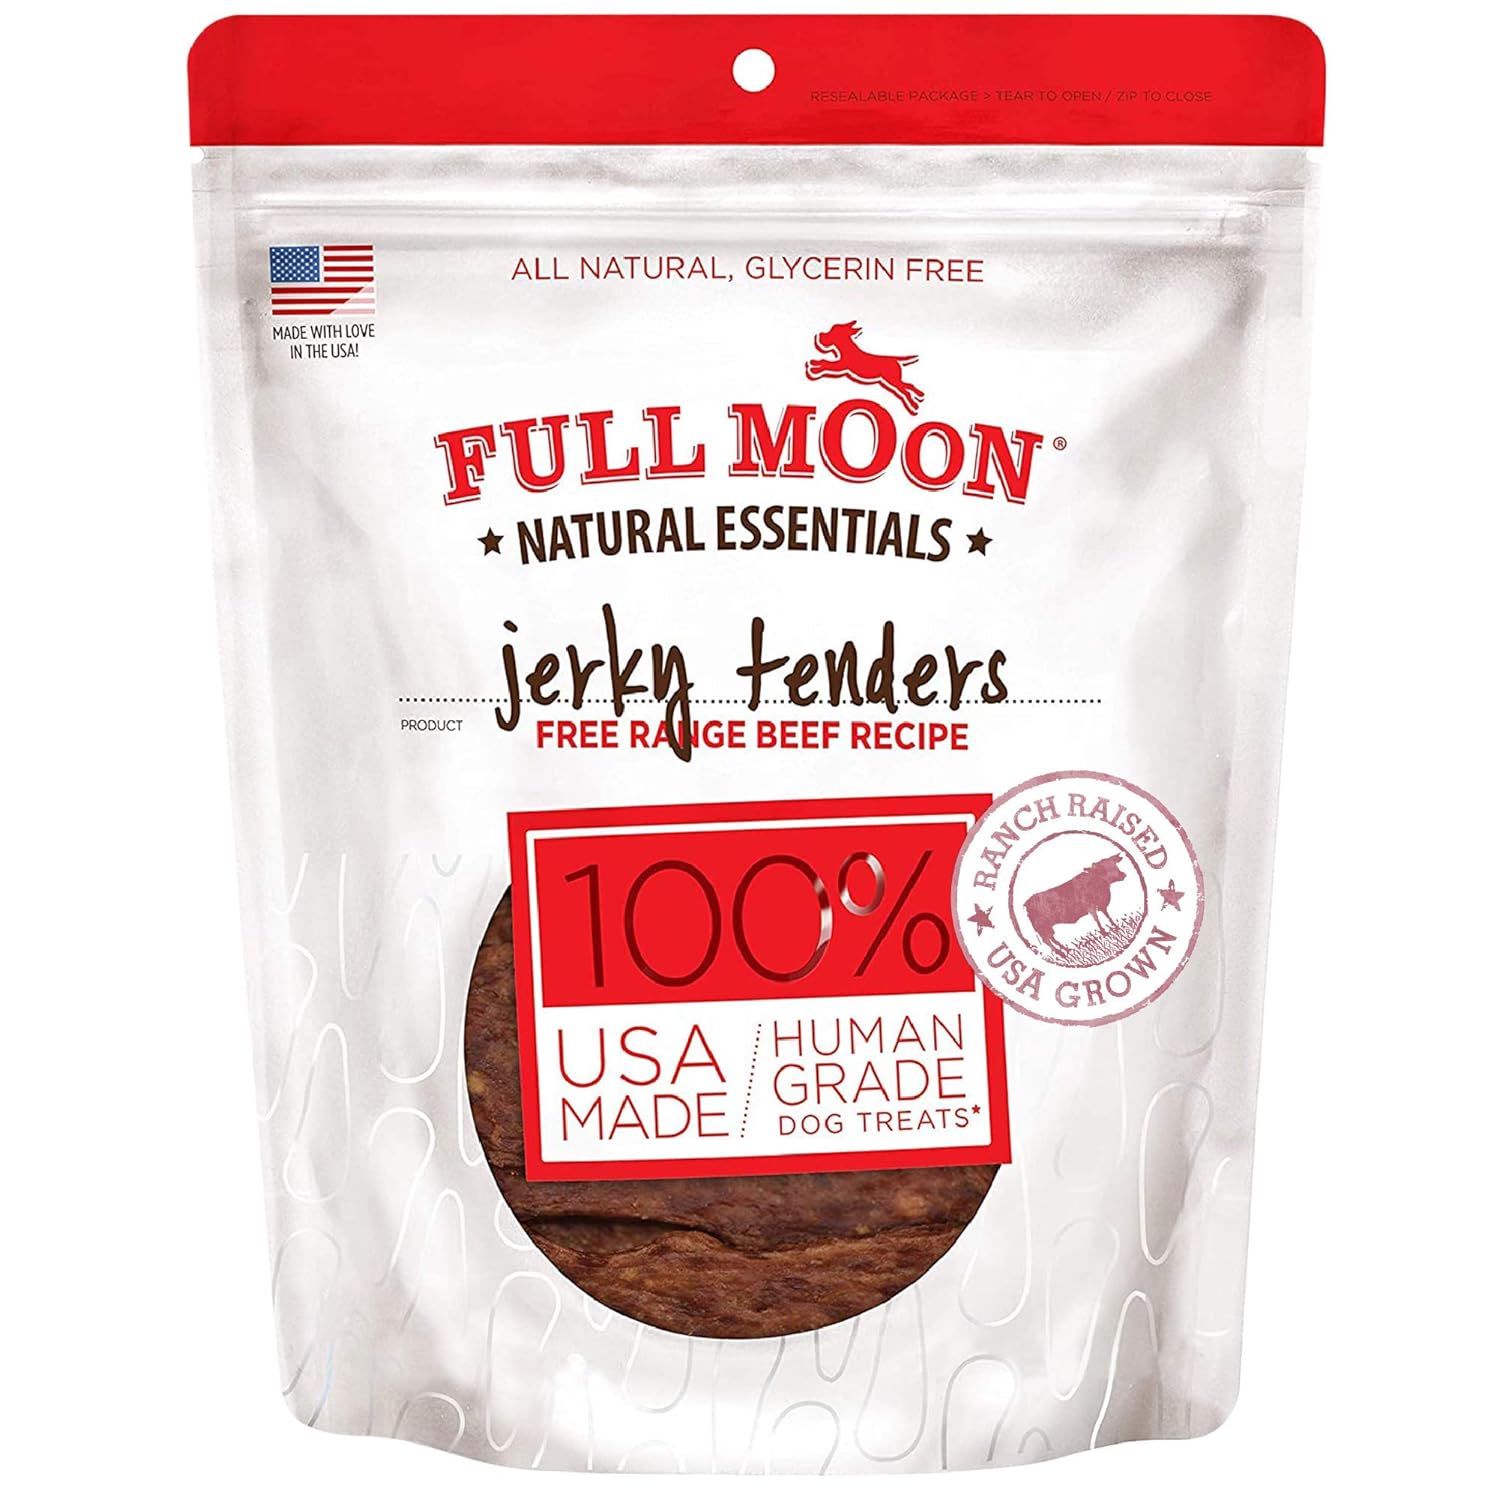 Full Moon All Natural Essentials Beef Jerky Tenders Free Range Human Grade 24 oz